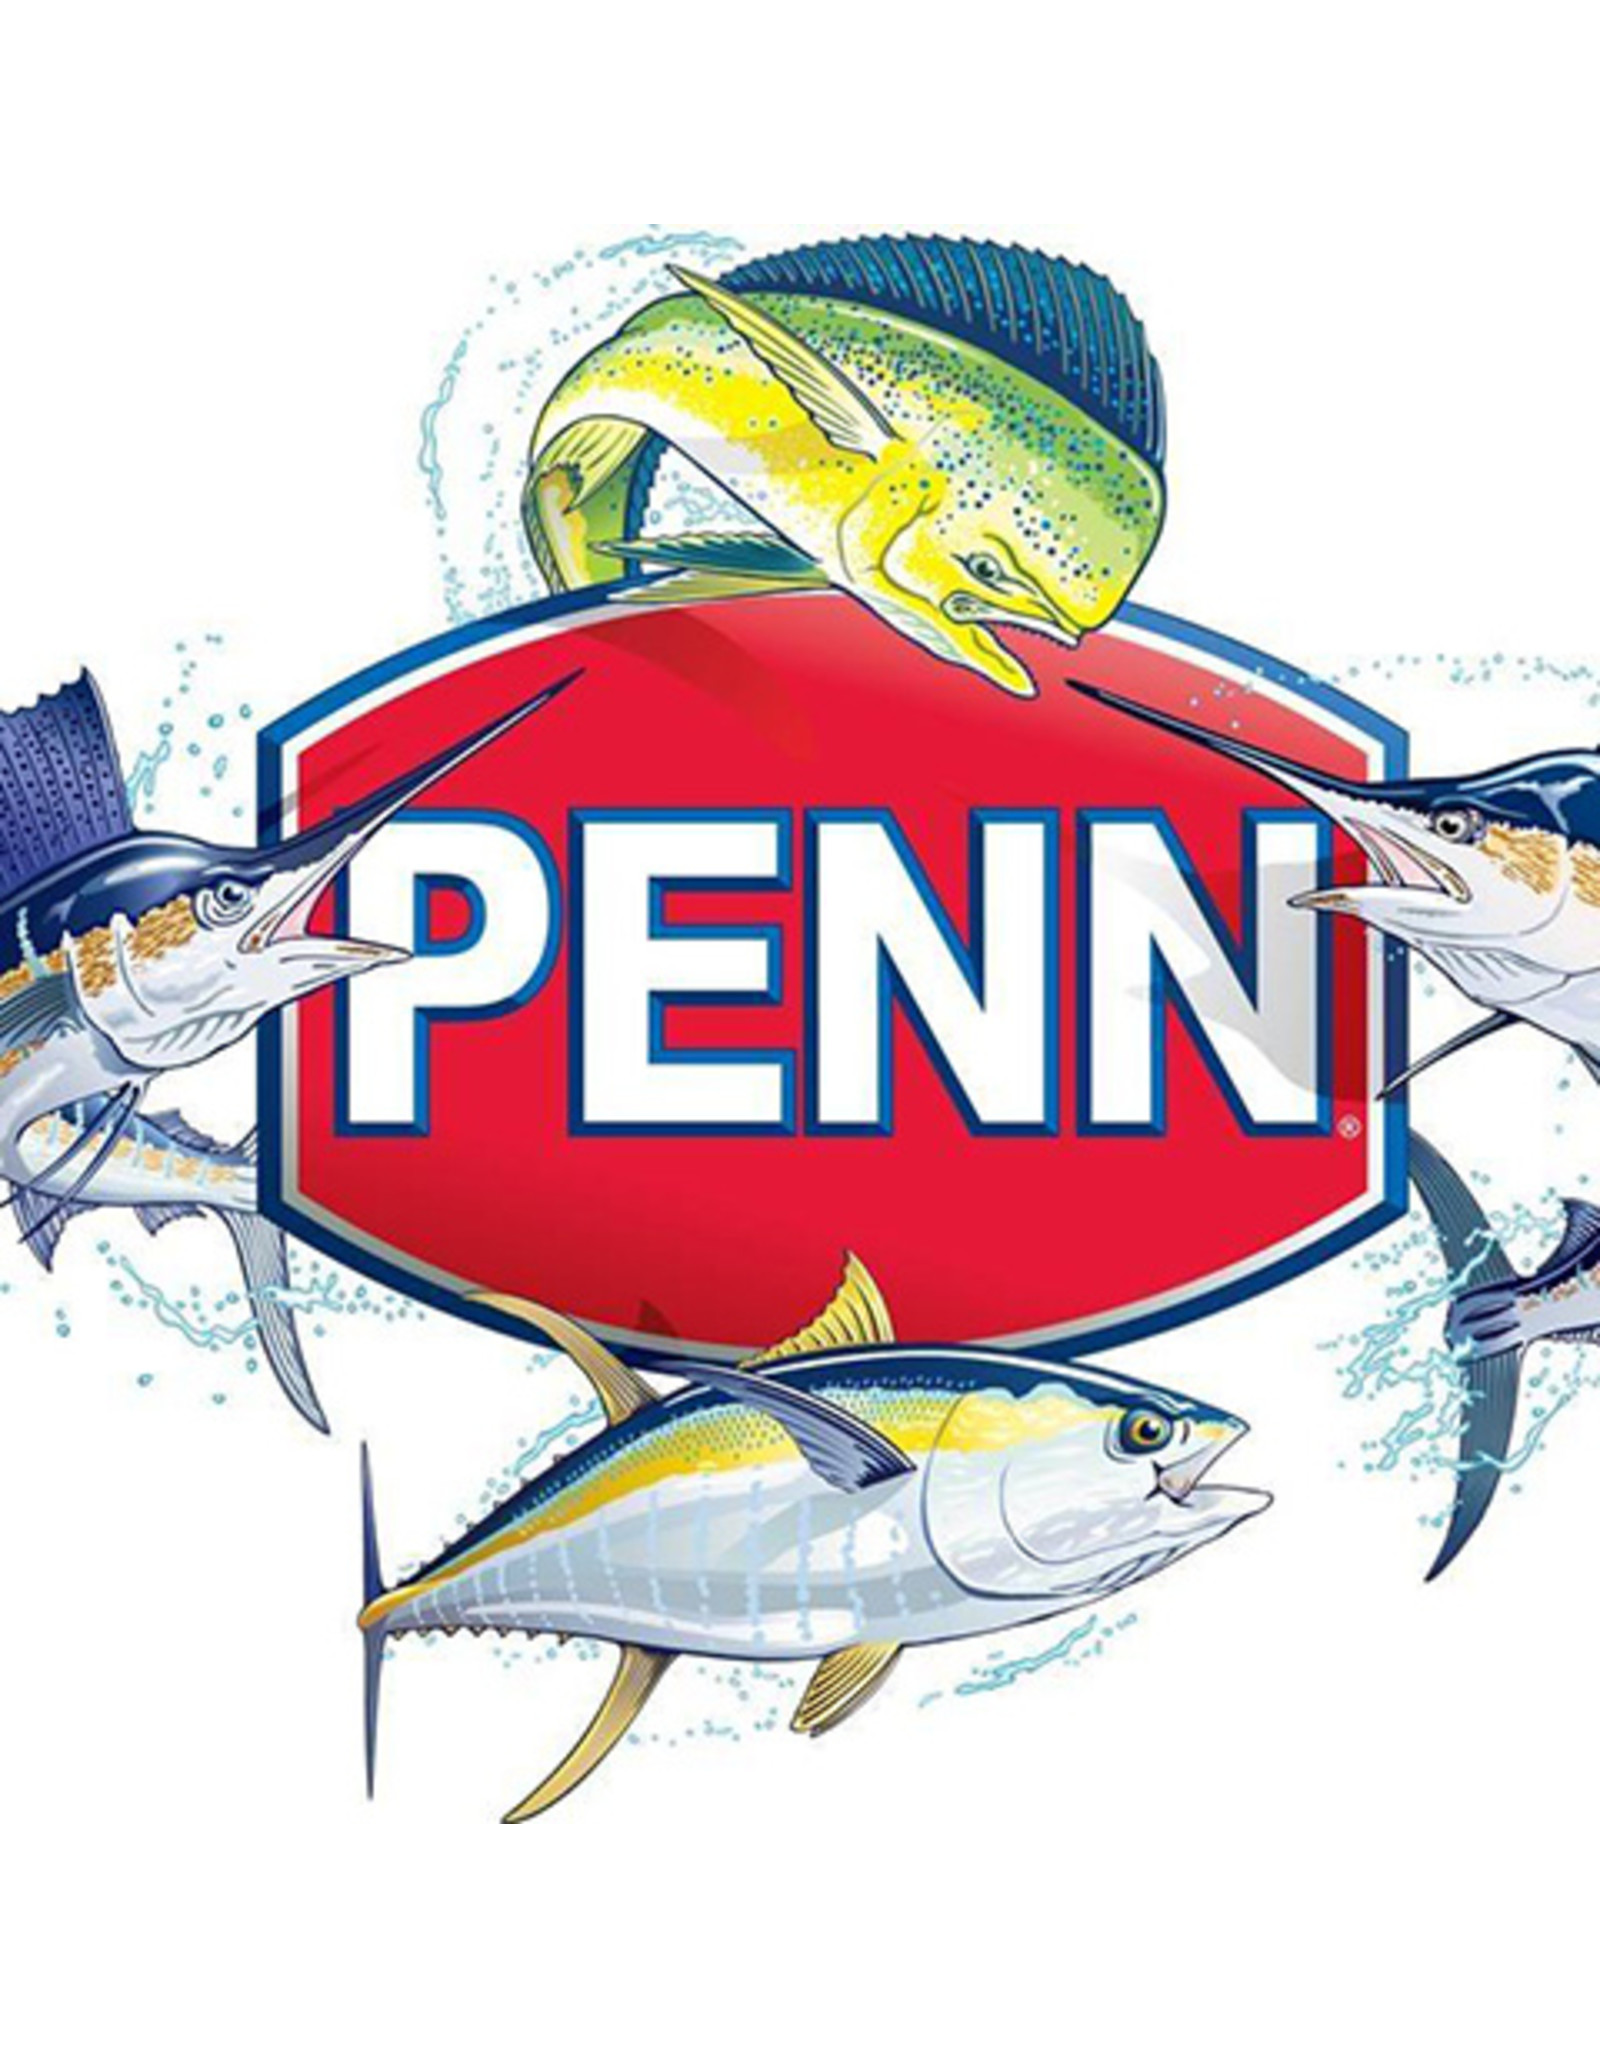 Penn 95-130  CLICK TONGUE BUSHING